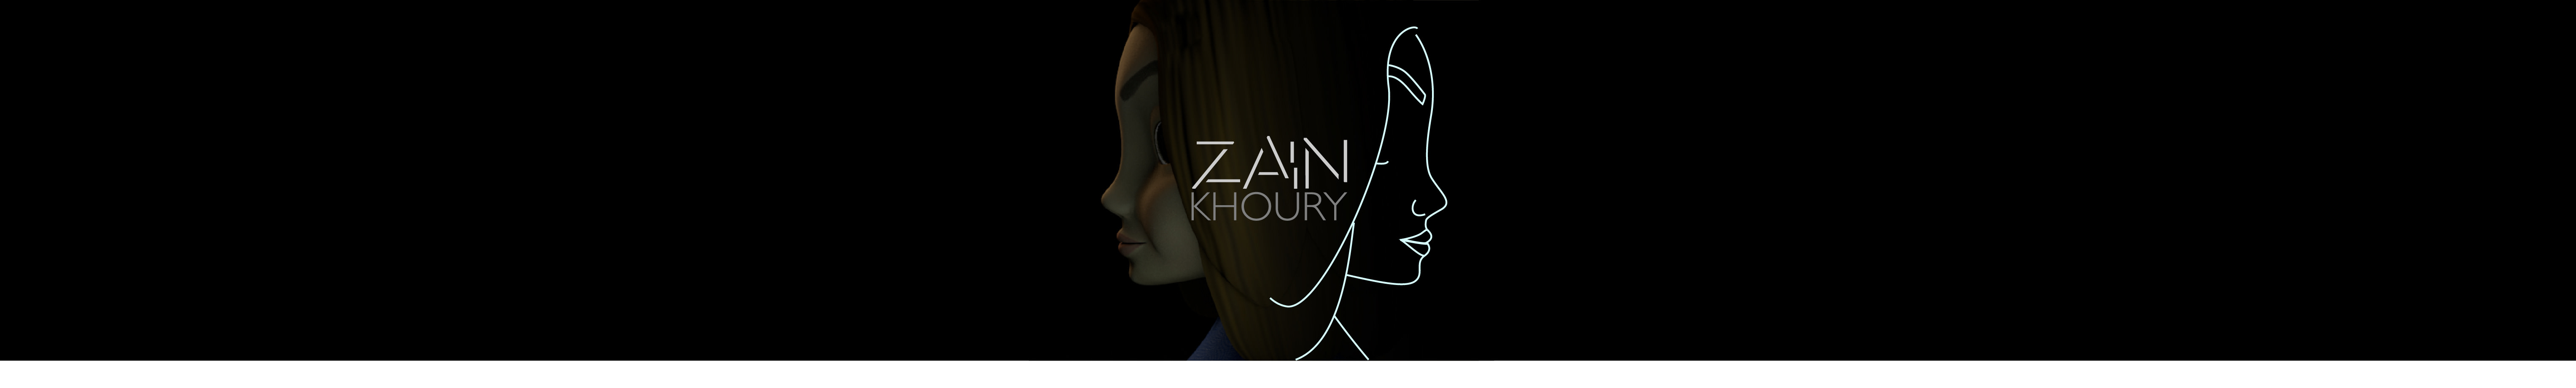 Zain Khoury's profile banner